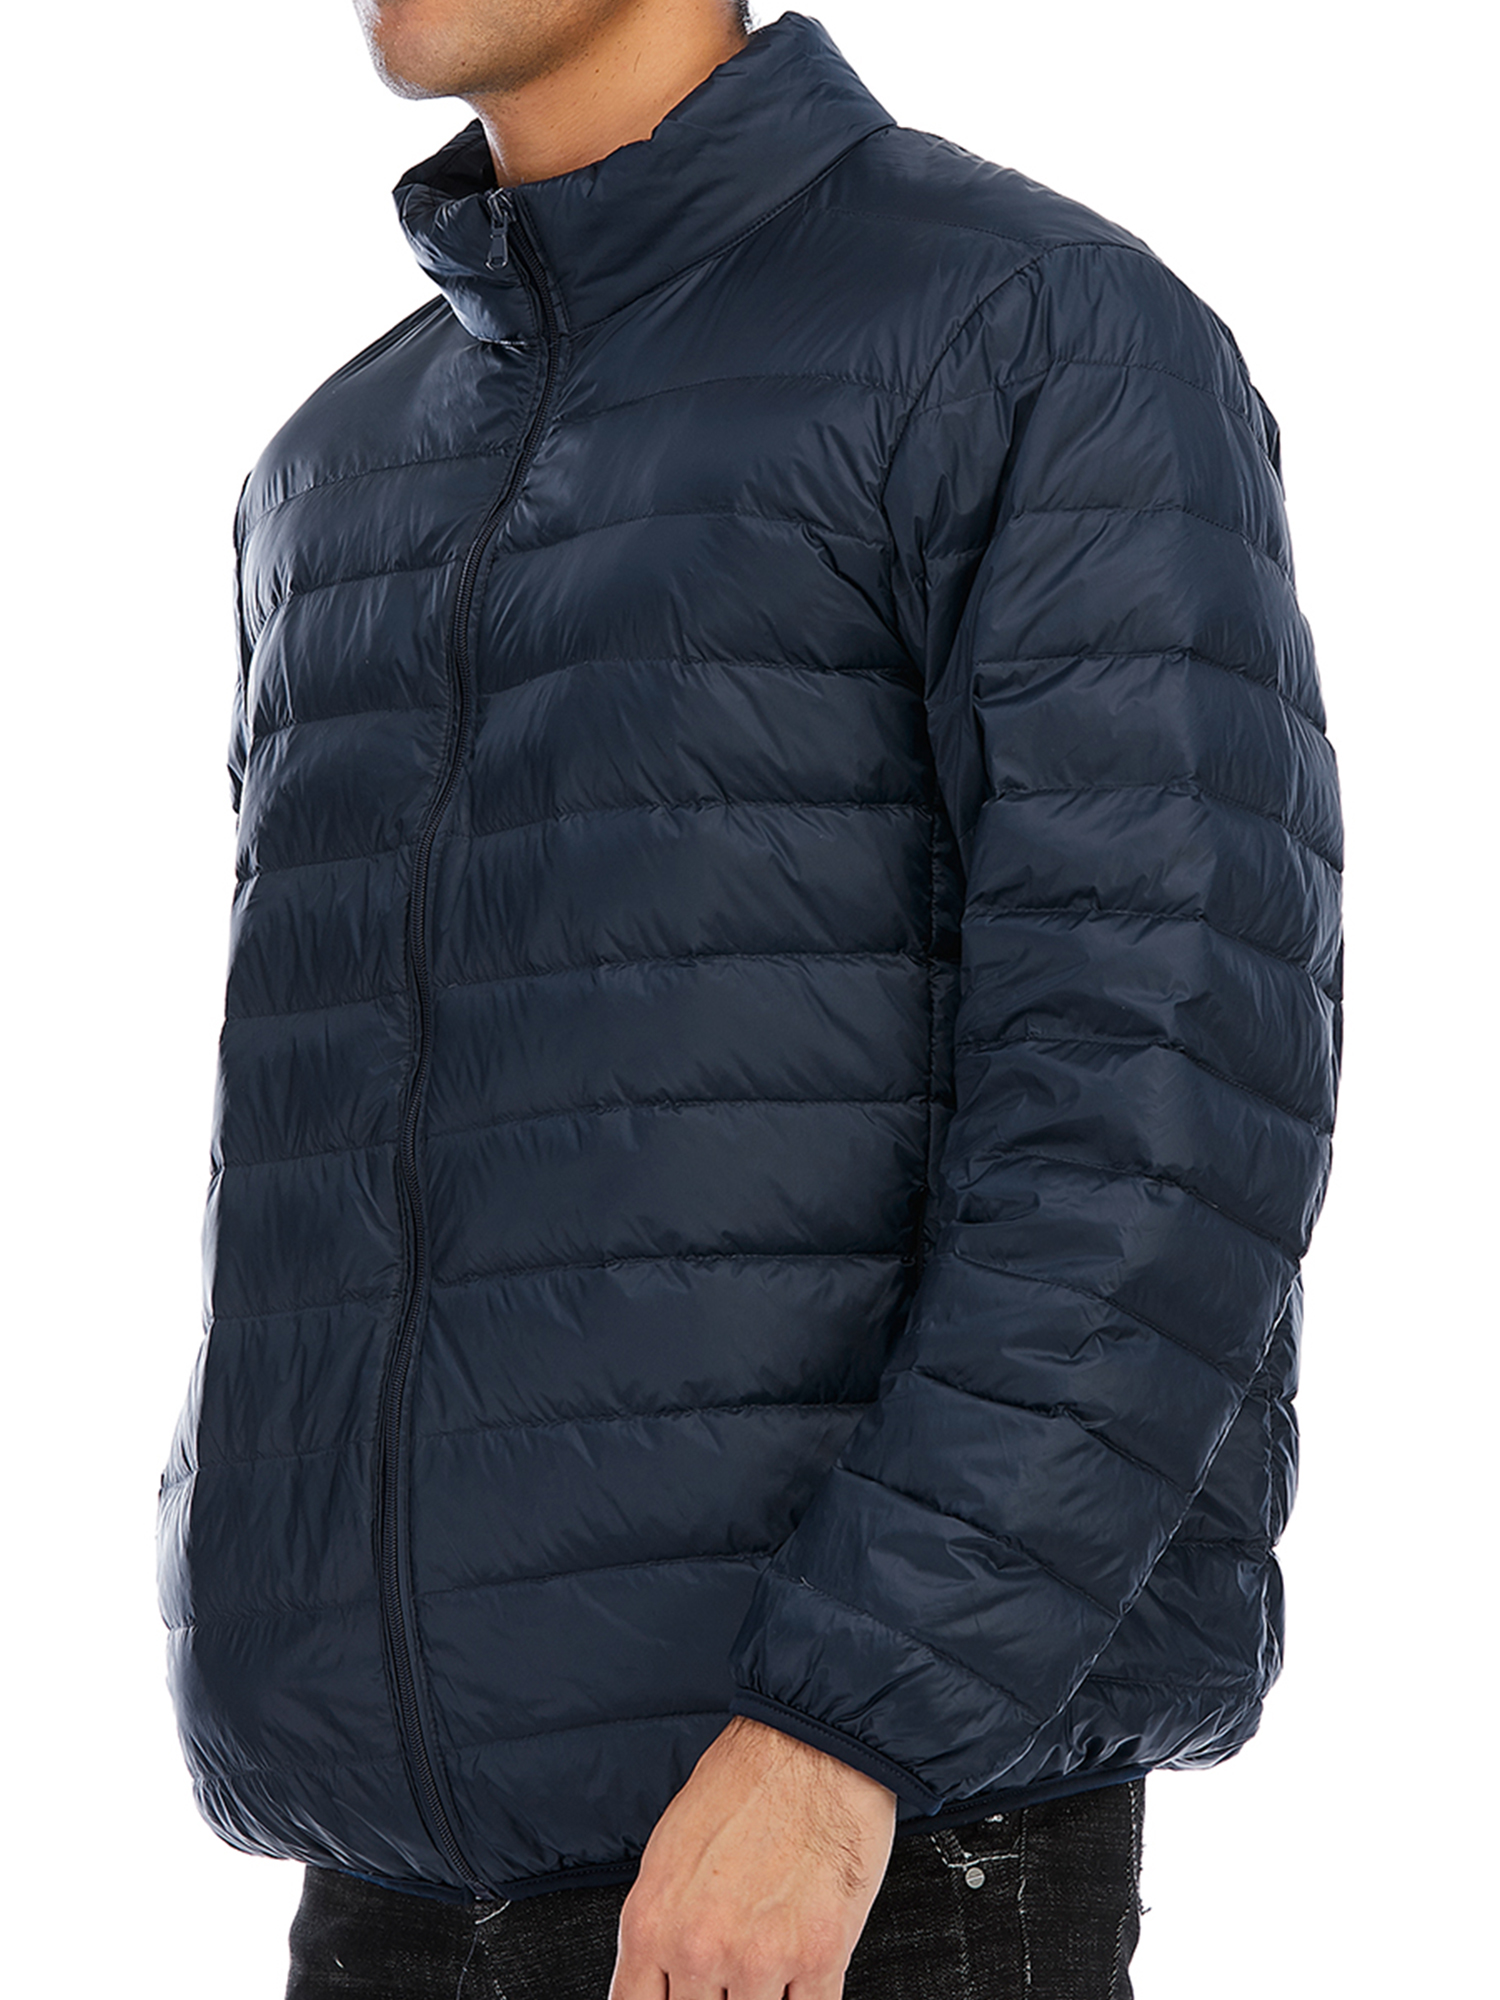 FOCUSSEXY Mens Down Jacket, Light Weight Puffer Coat for Men, Men's Down Puffer Jacket Packable Puffer Jacket Windproof Zip Up Warm Coat Outerwear - image 5 of 7